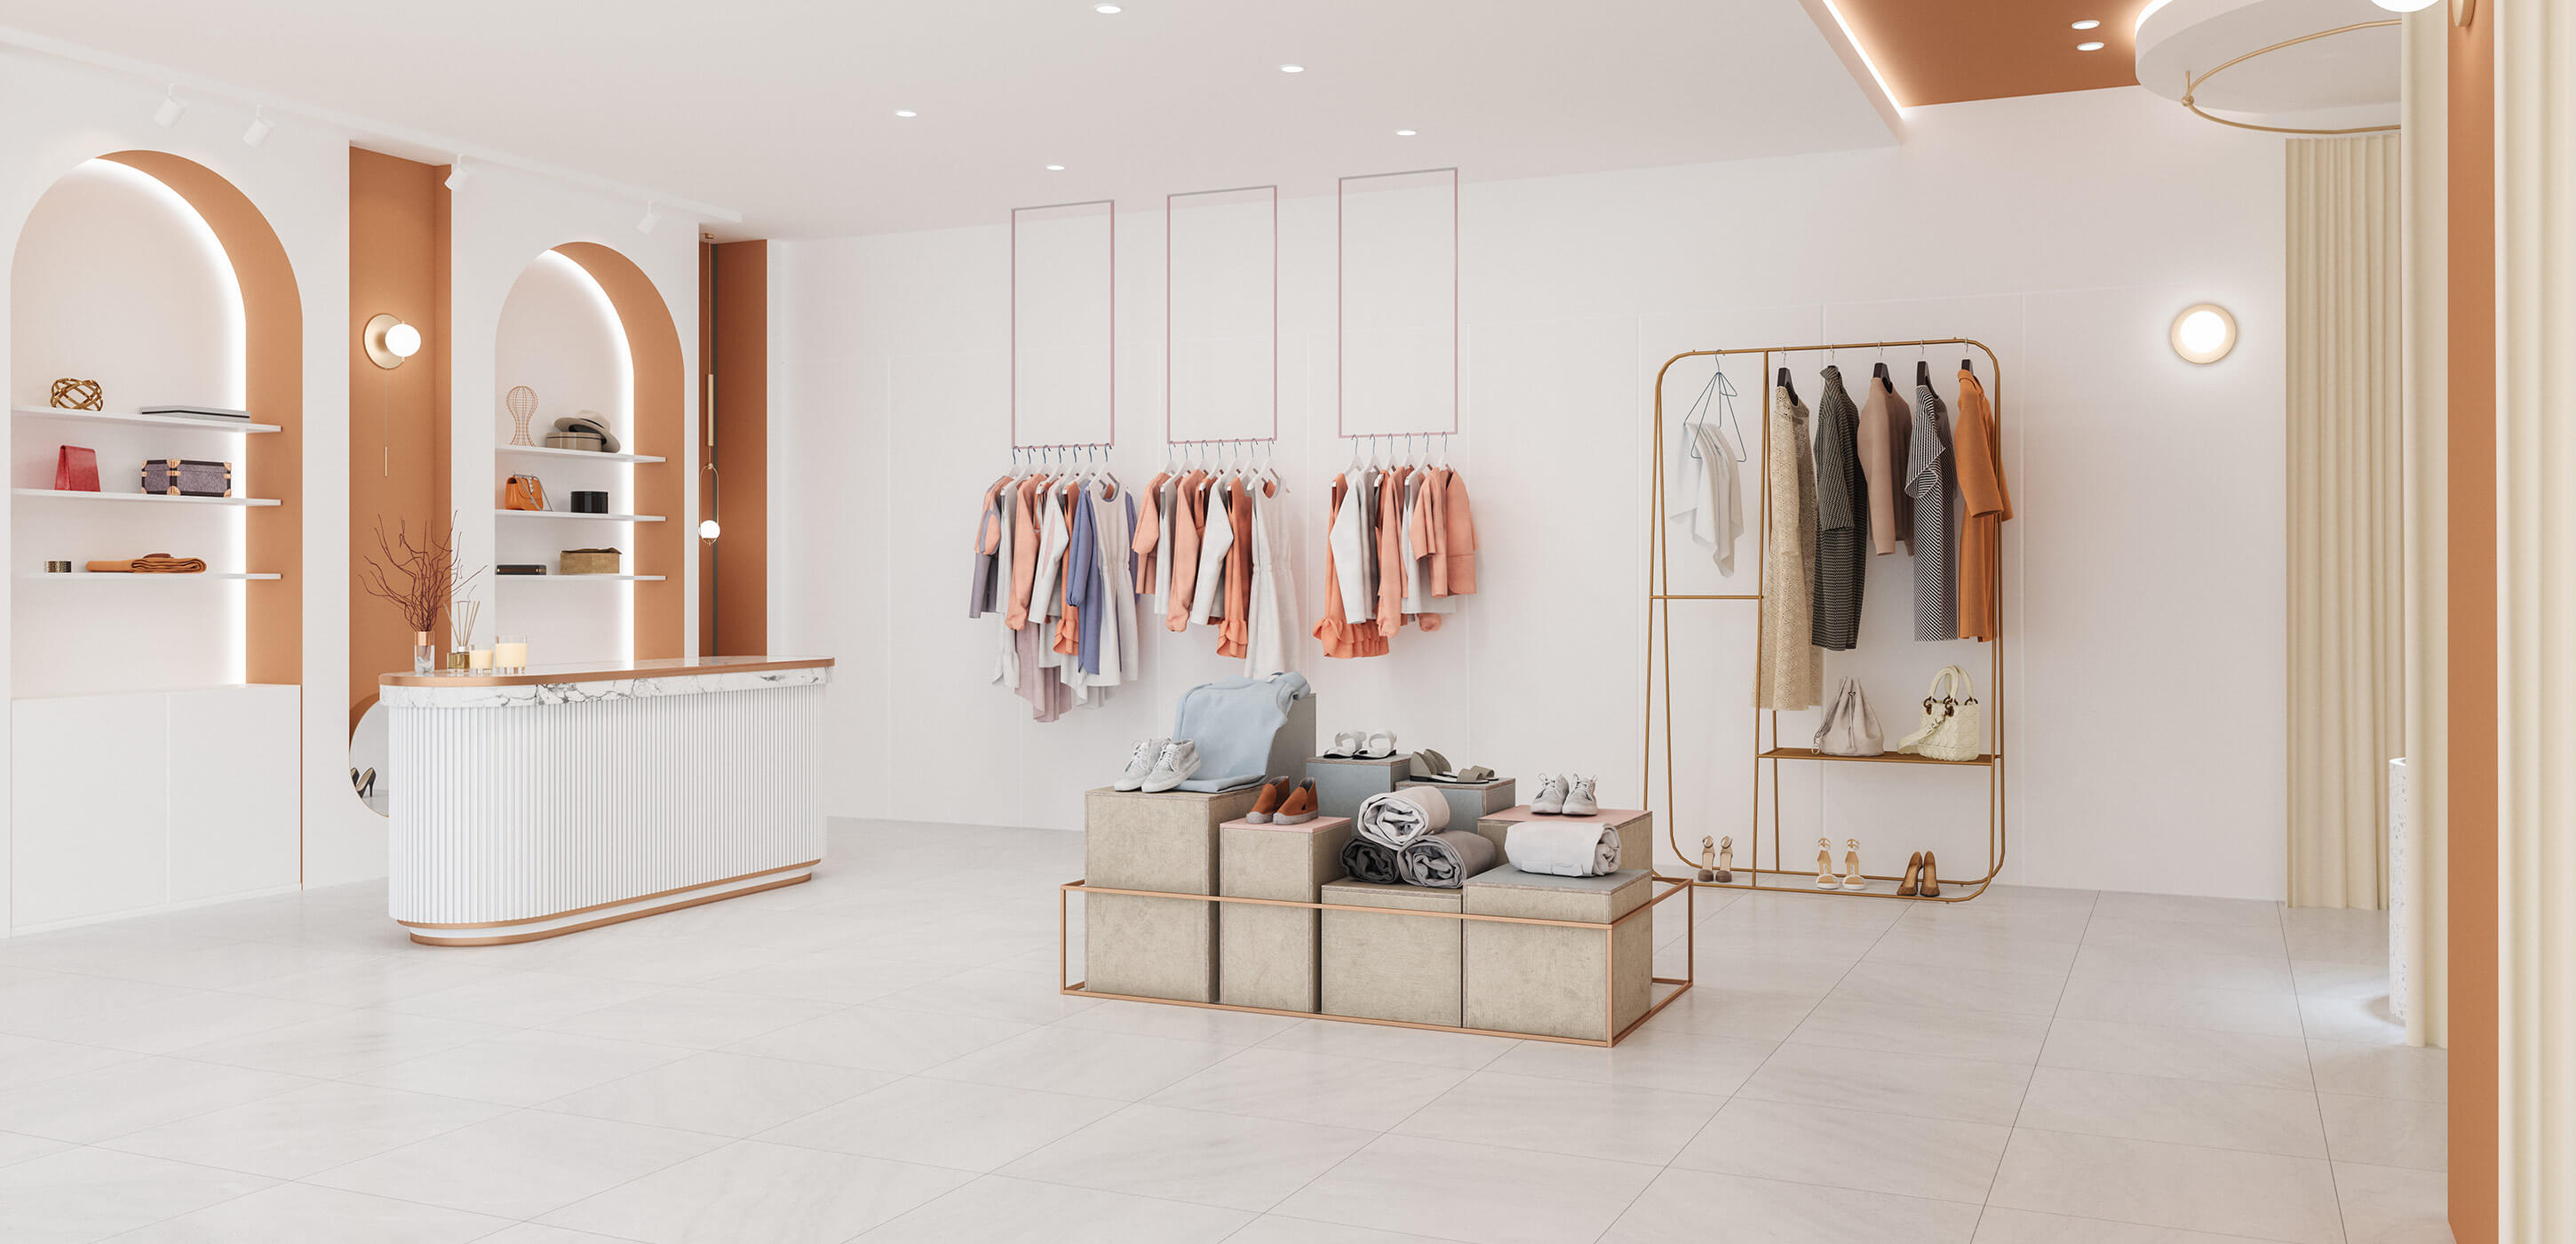 a minimalist retail shop floor